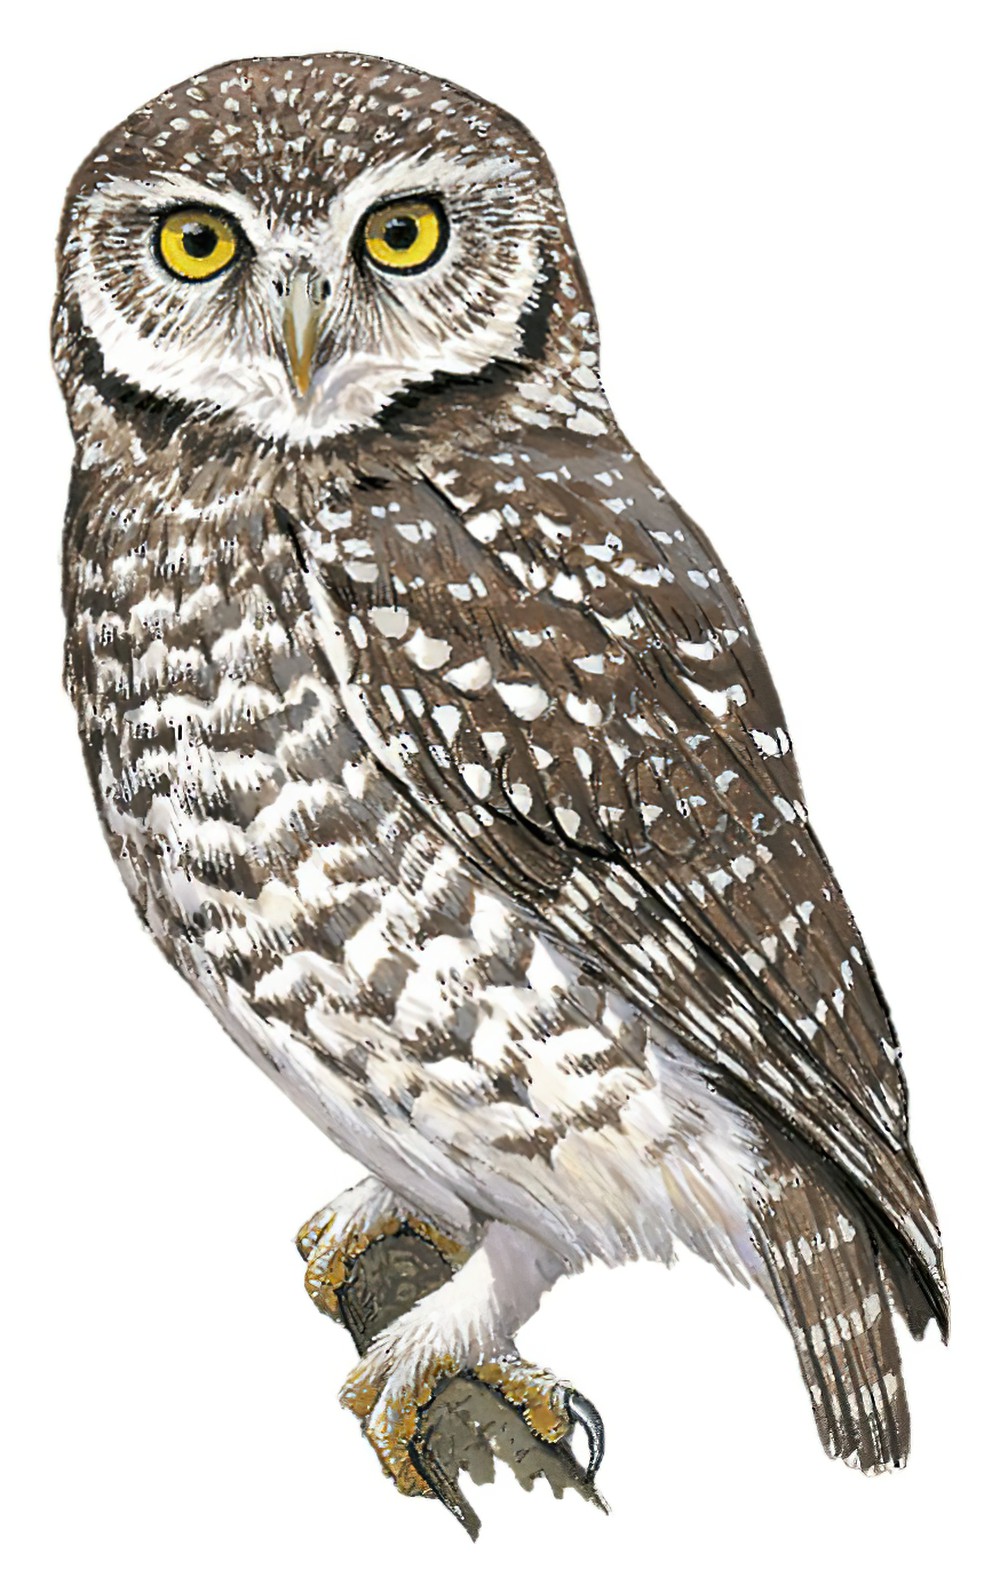 Spotted Owlet / Athene brama